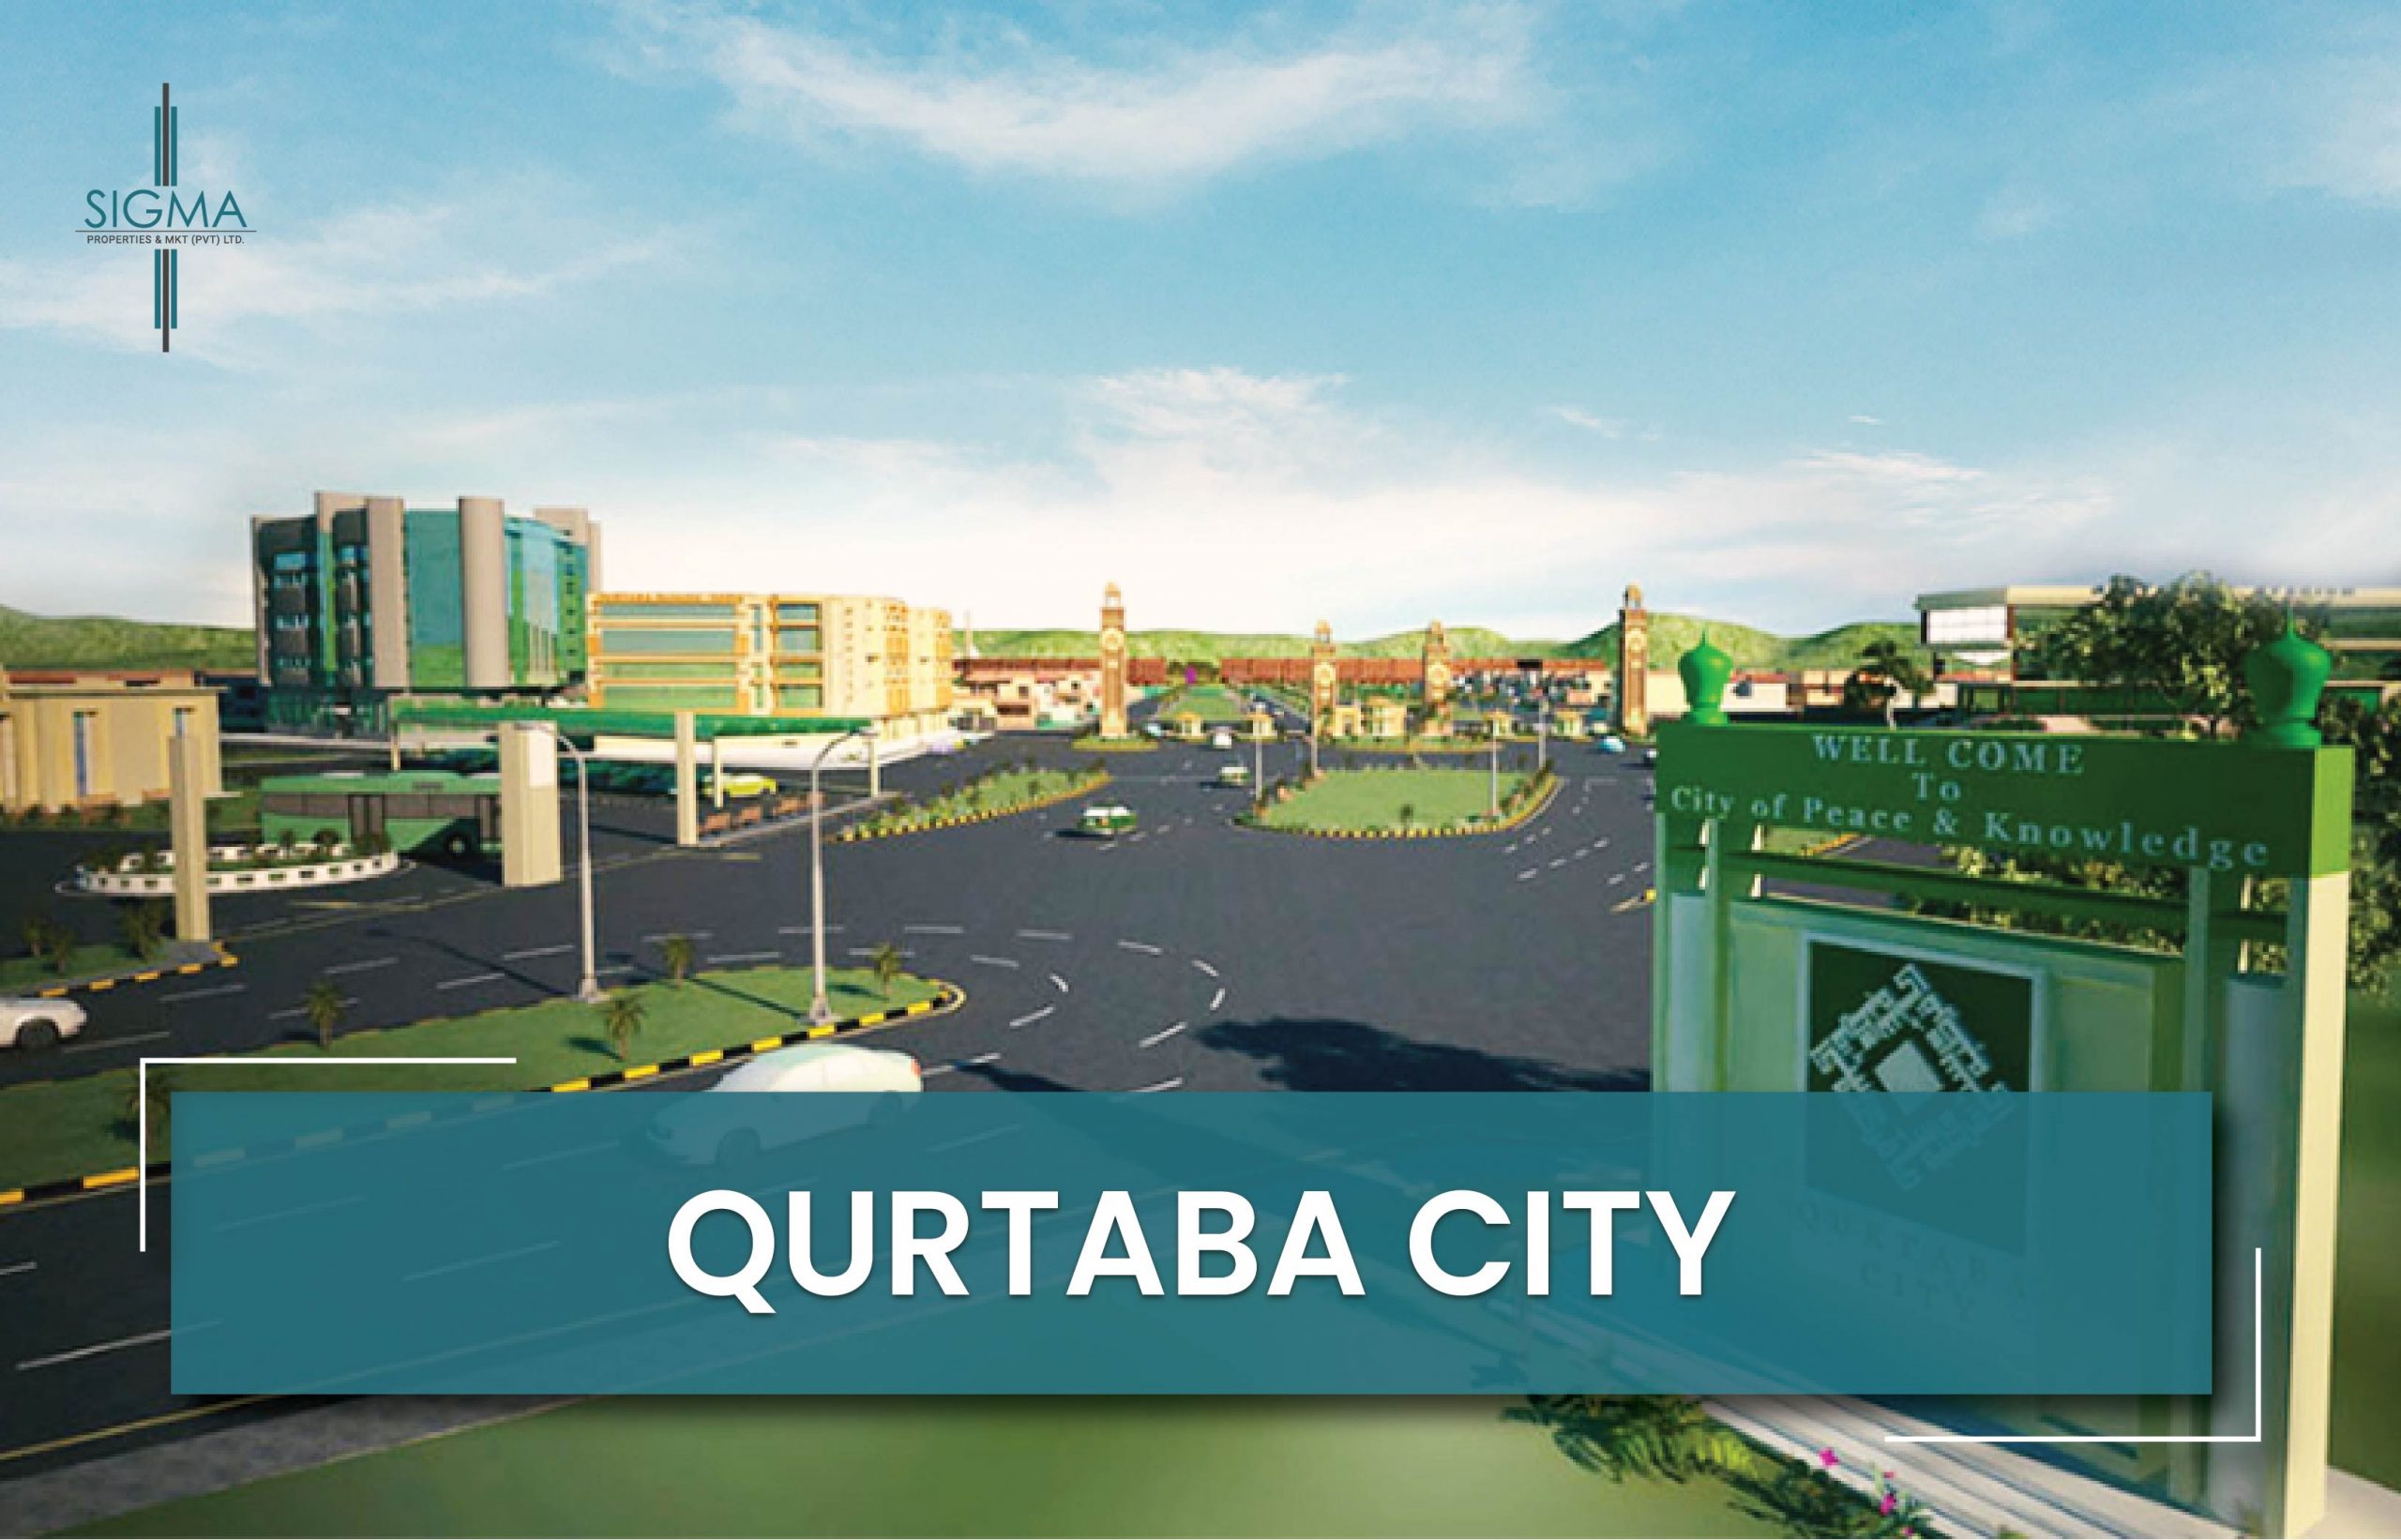 qurtaba city